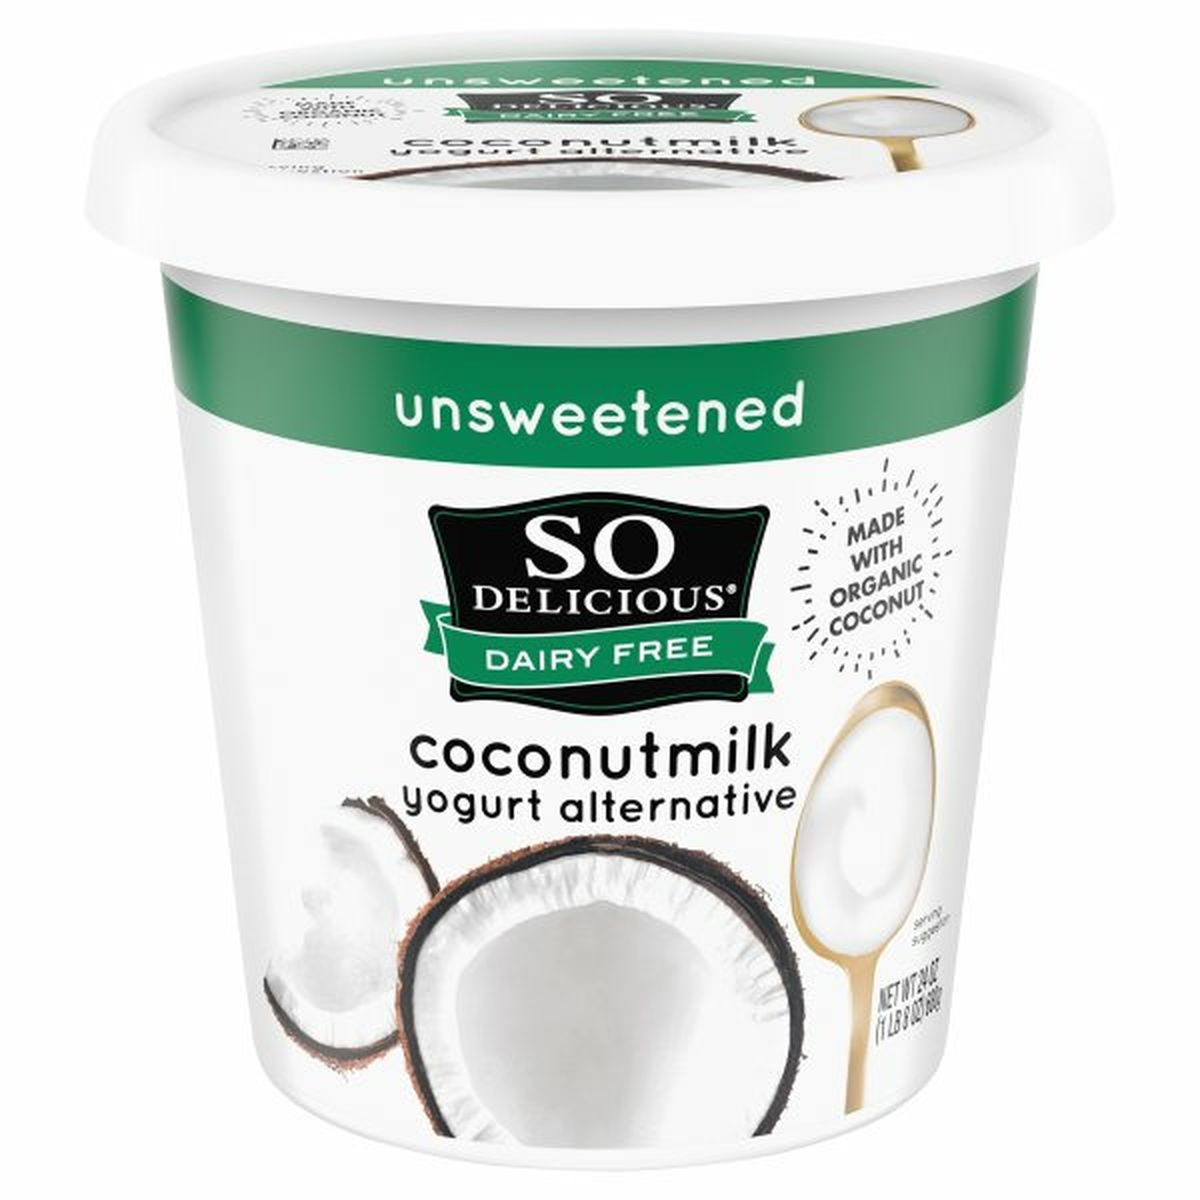 Calories in So Delicious Dairy Free Yogurt Alternative, Coconutmilk, Unsweetened